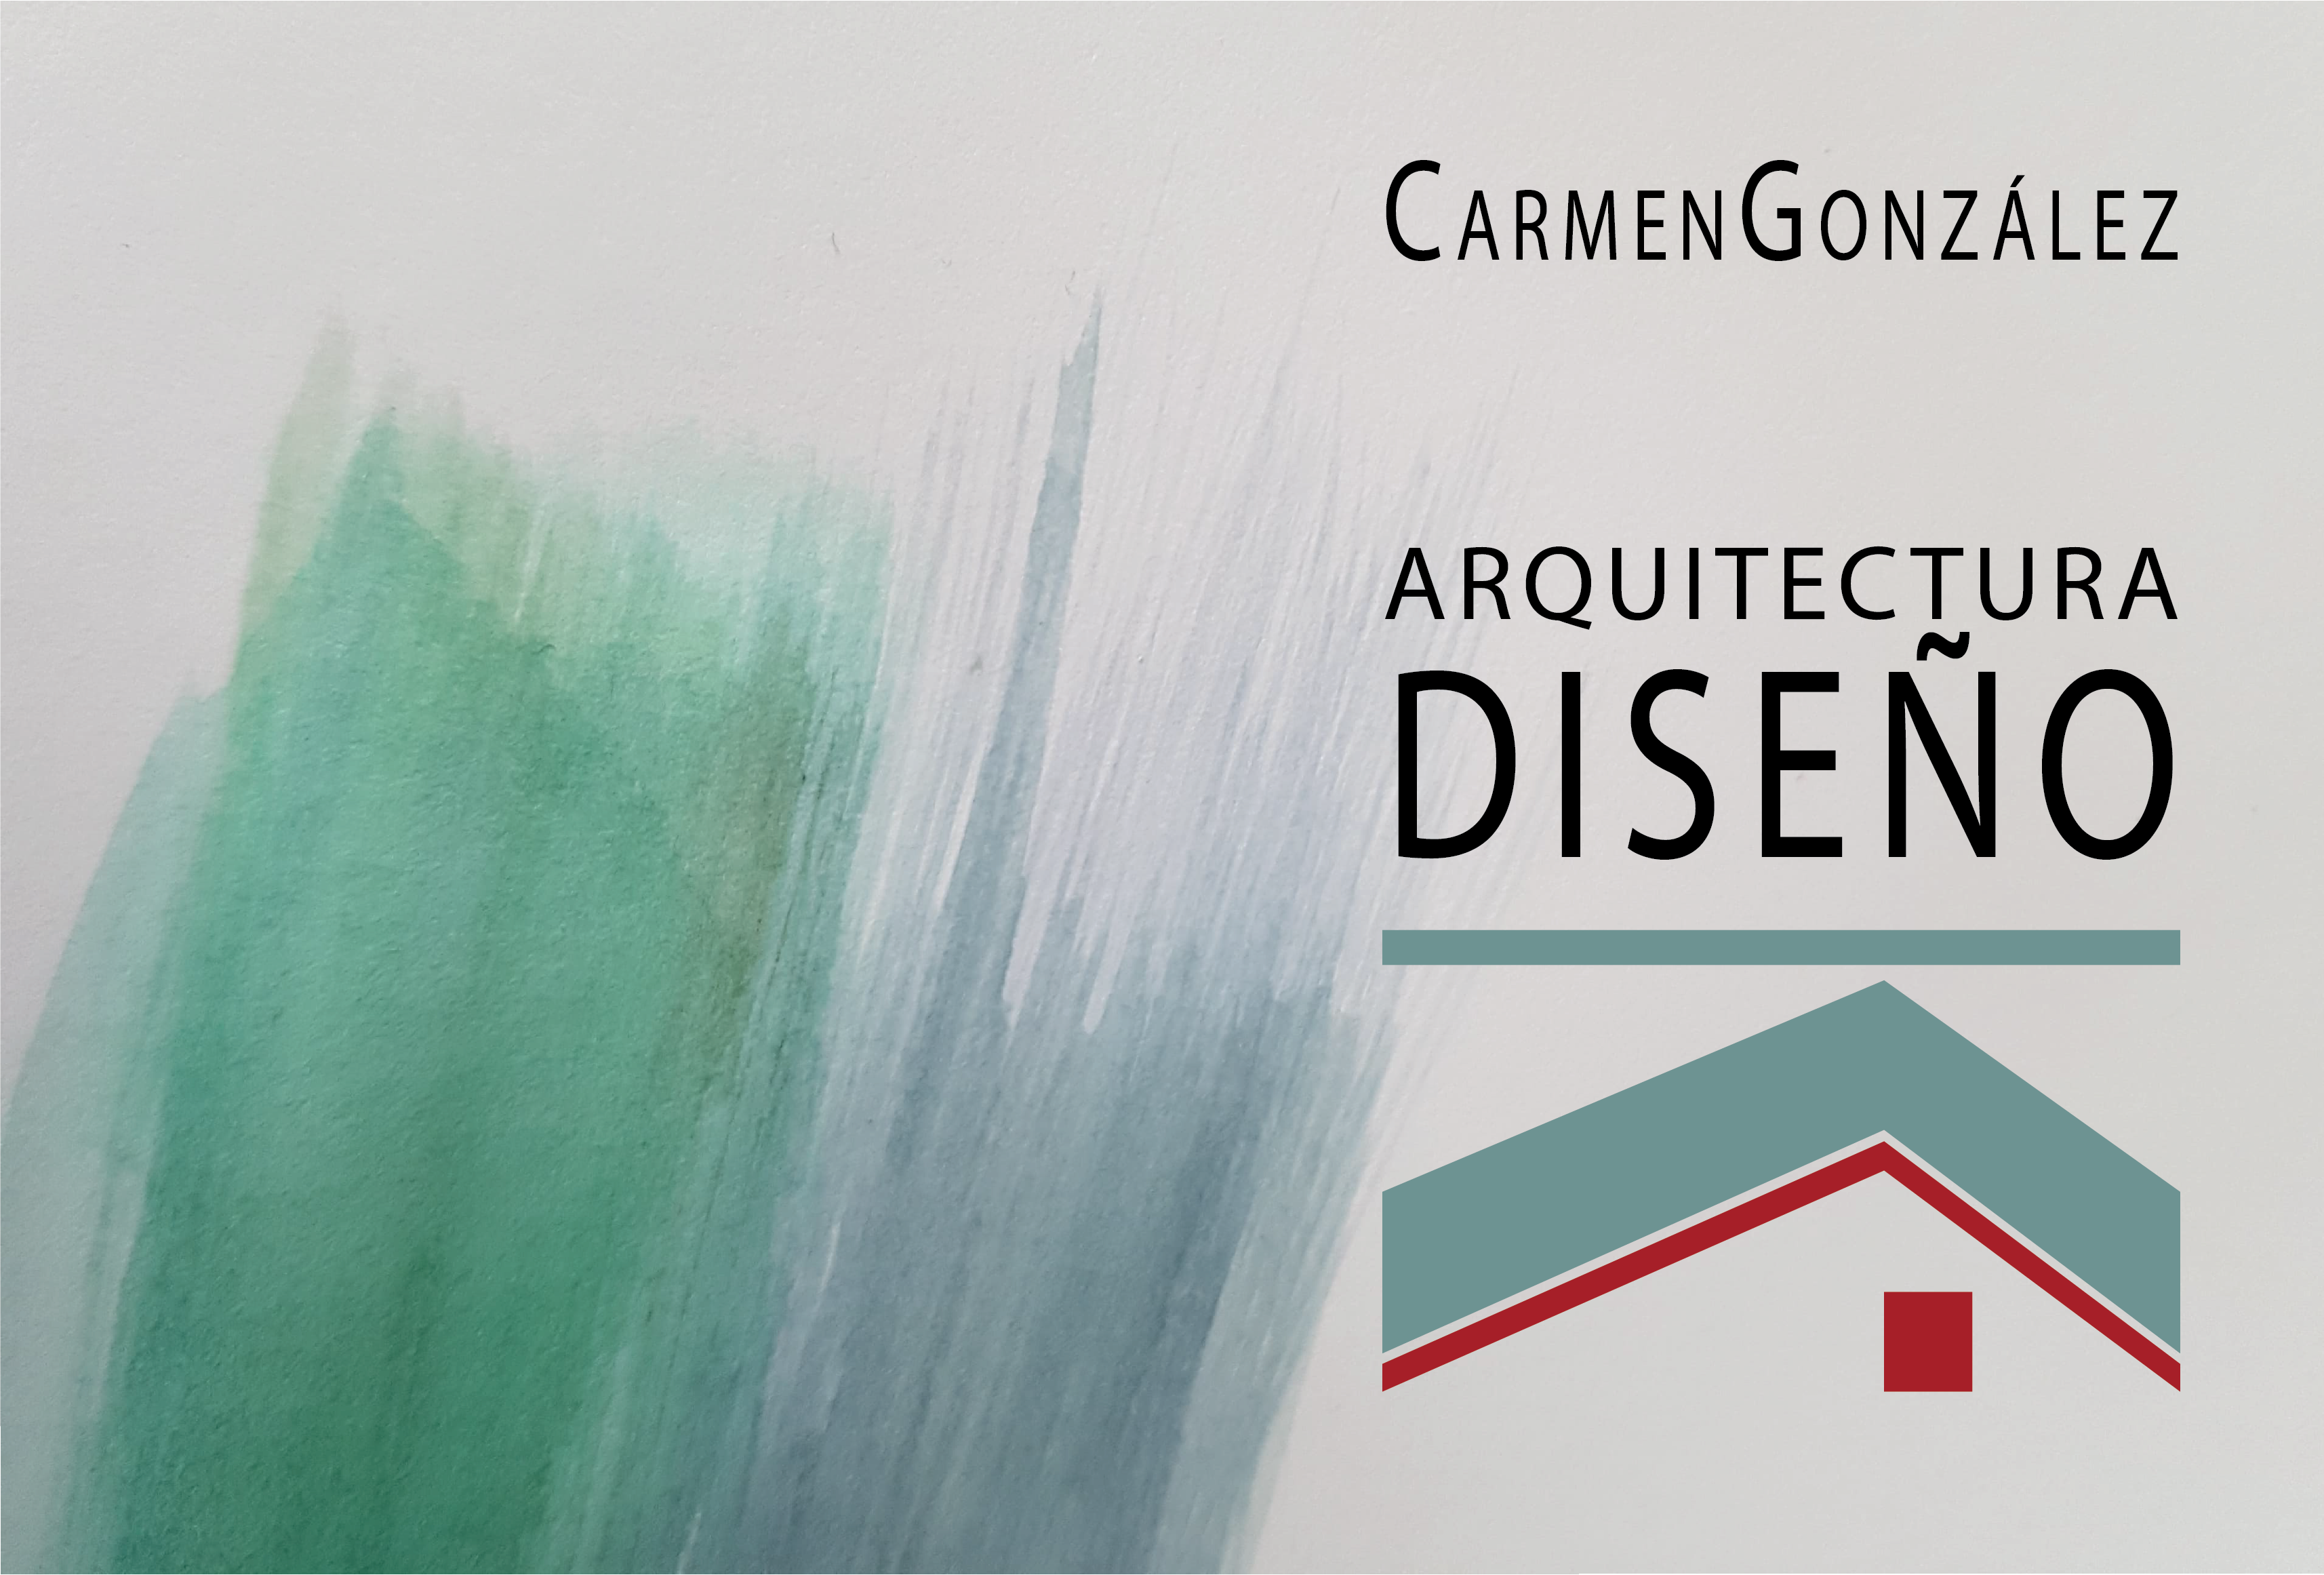 CARMEN GONZALEZ ARQUITECTURA Y DISEÑO logo